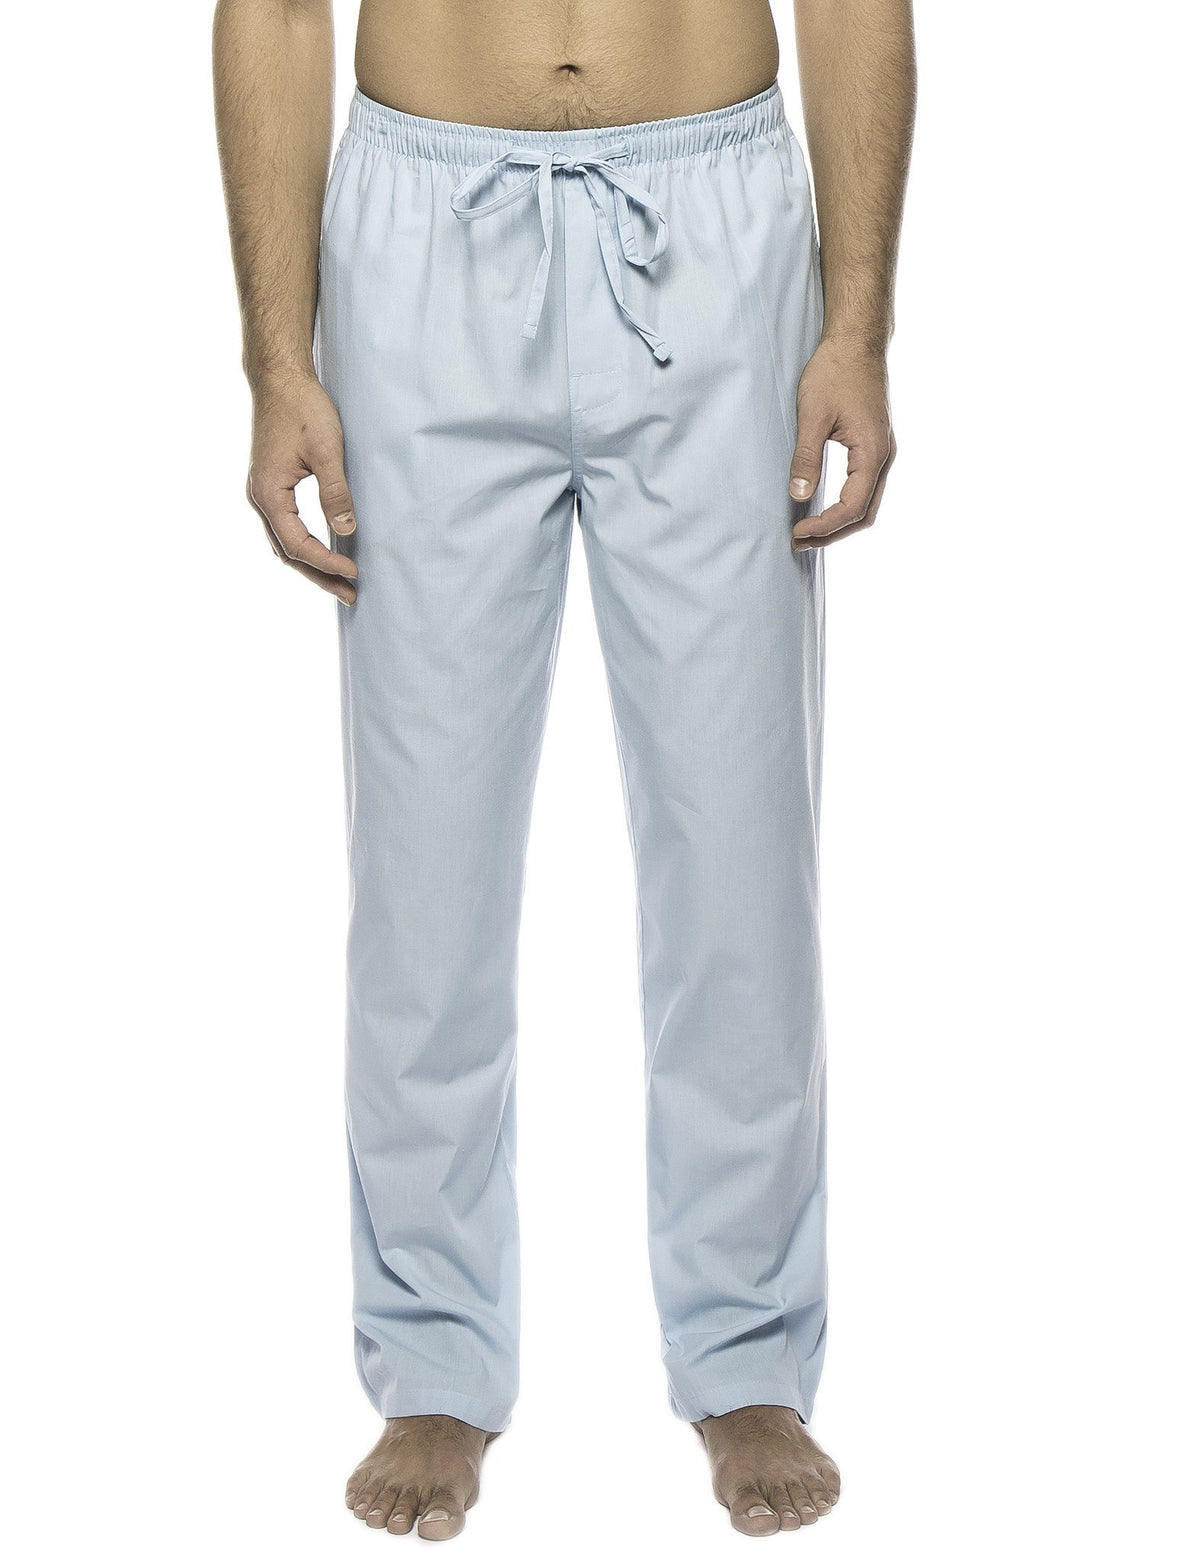 Men's 100% Woven Cotton Lounge Pants - Crystal Blue